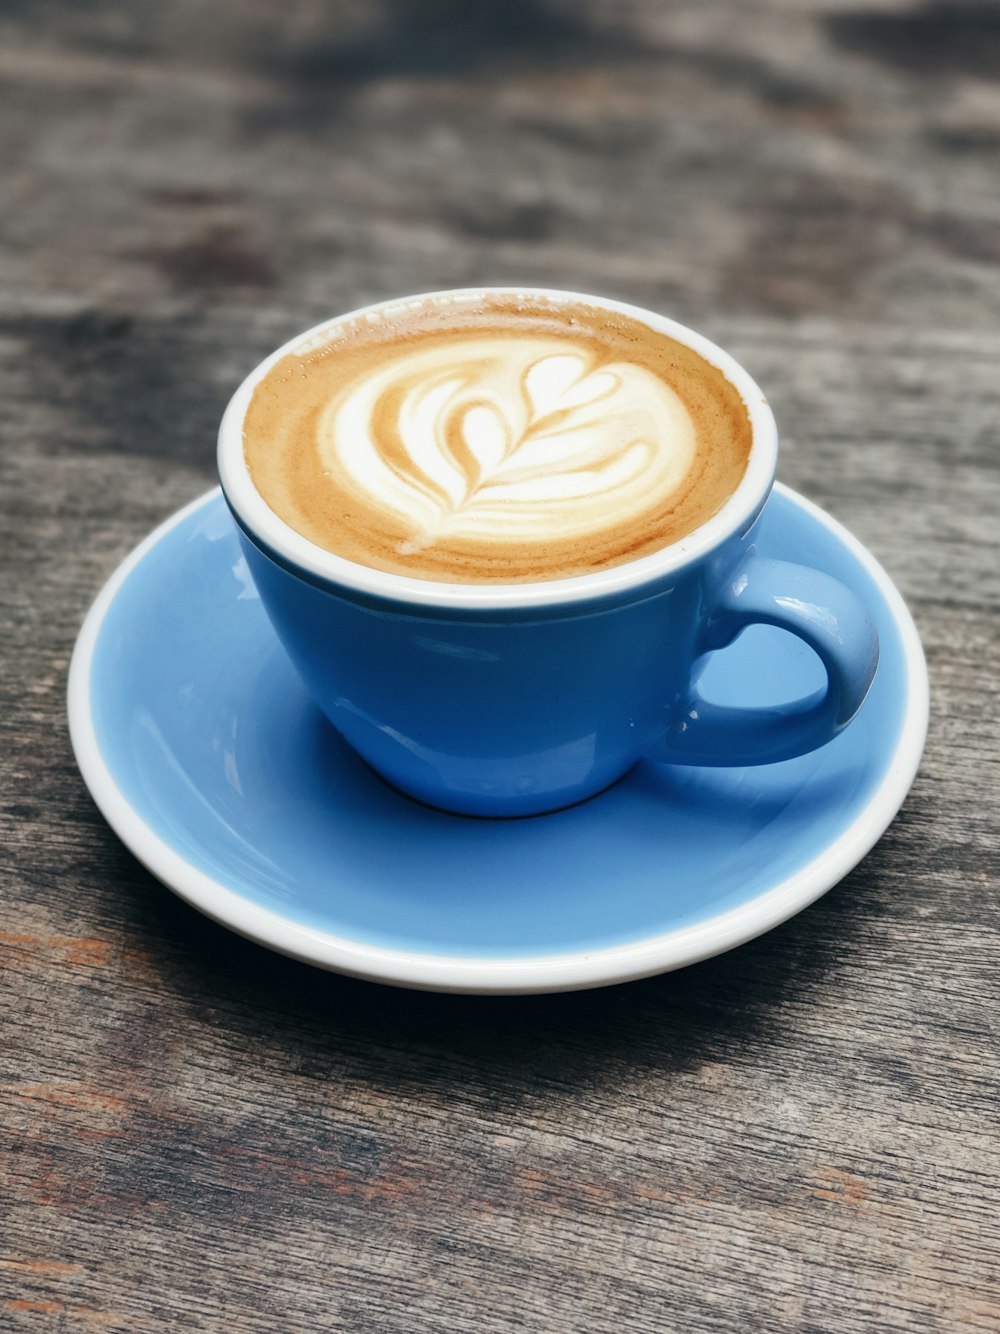 blue ceramic teacup with latte